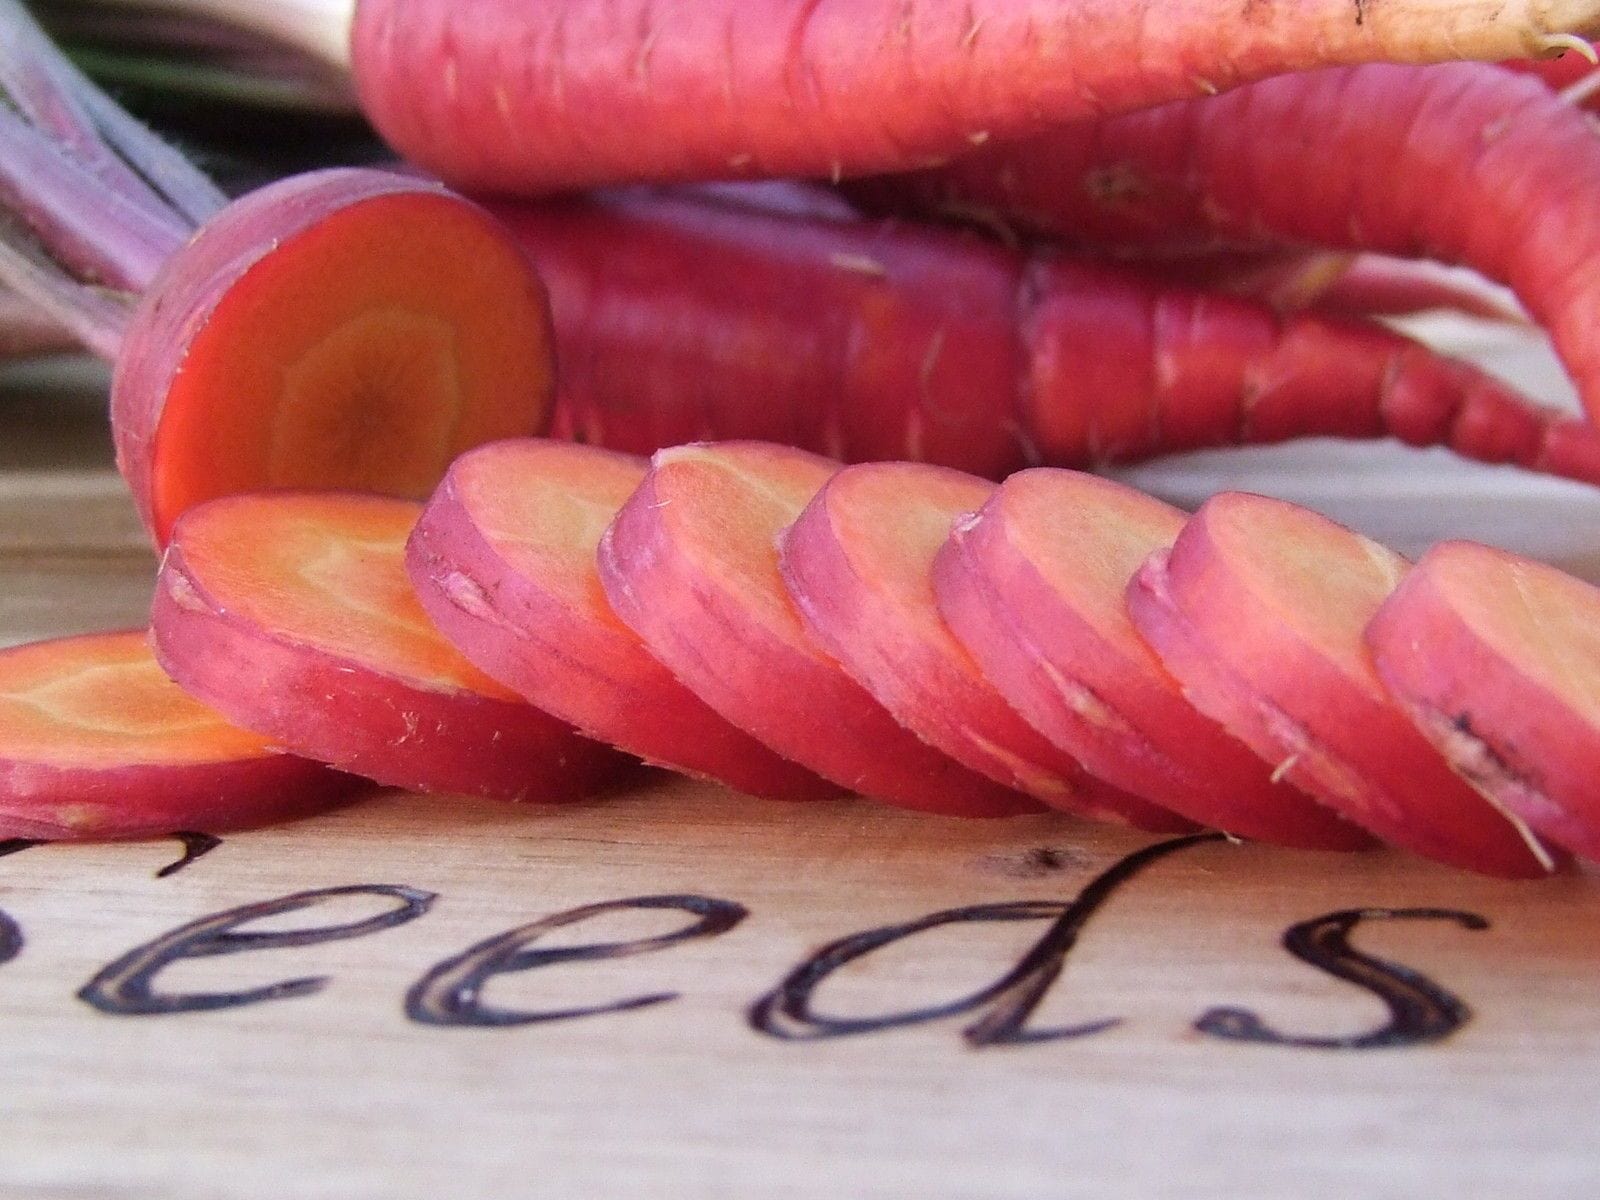 Carrot Purple Dragon - LifeForce Seeds